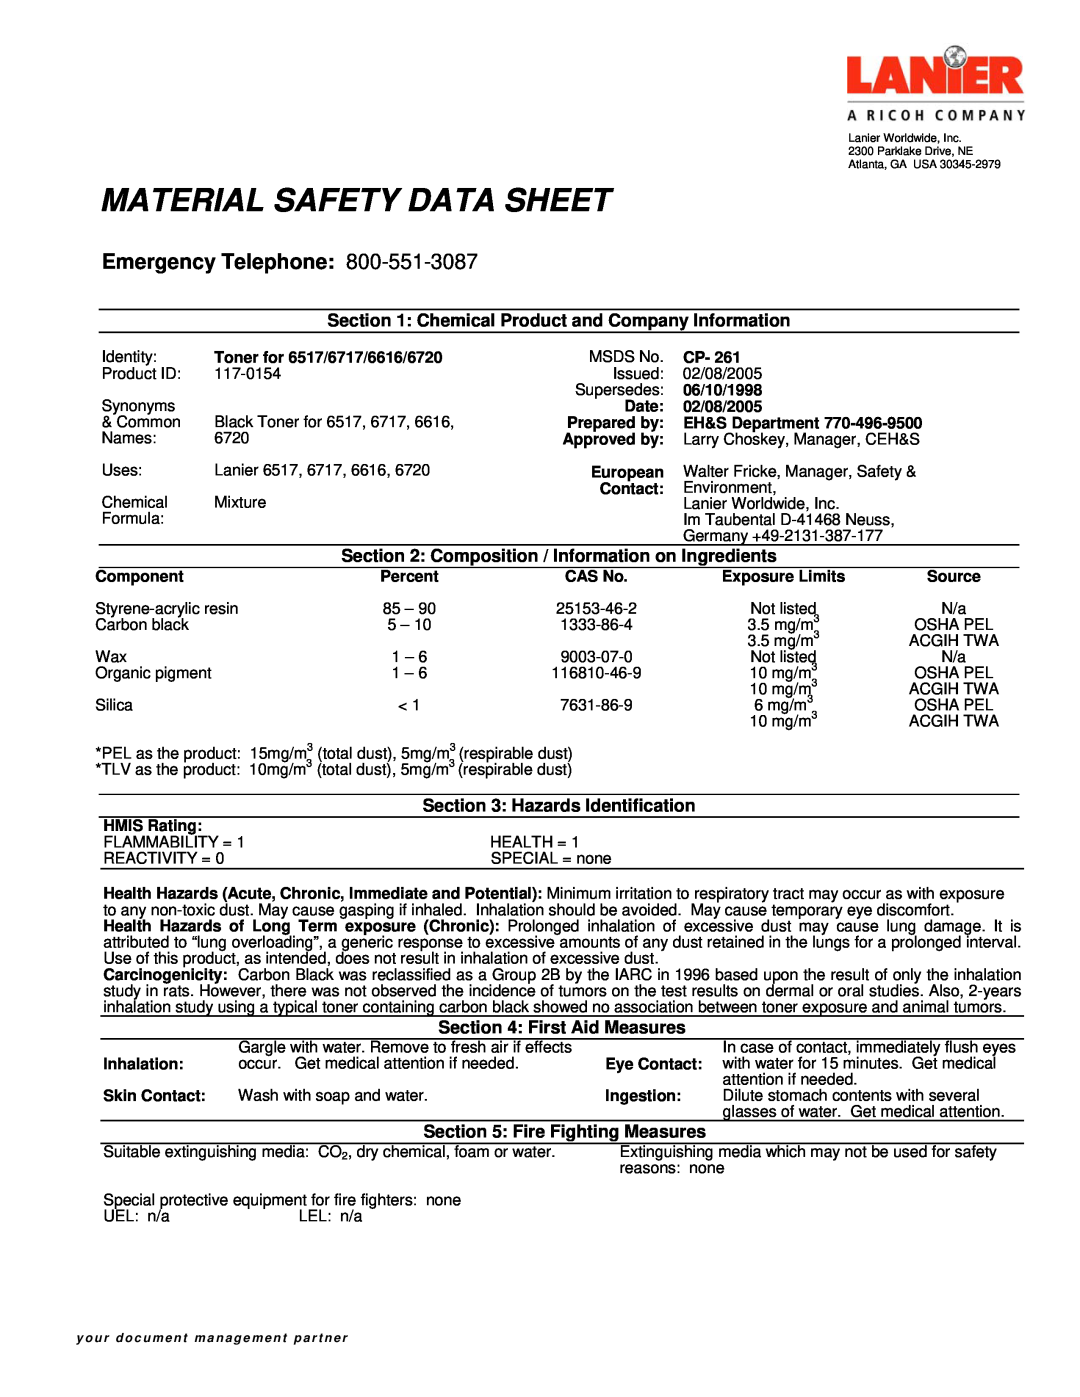 Lanier 117-0154 manual Material Safety Data Sheet, Emergency Telephone 